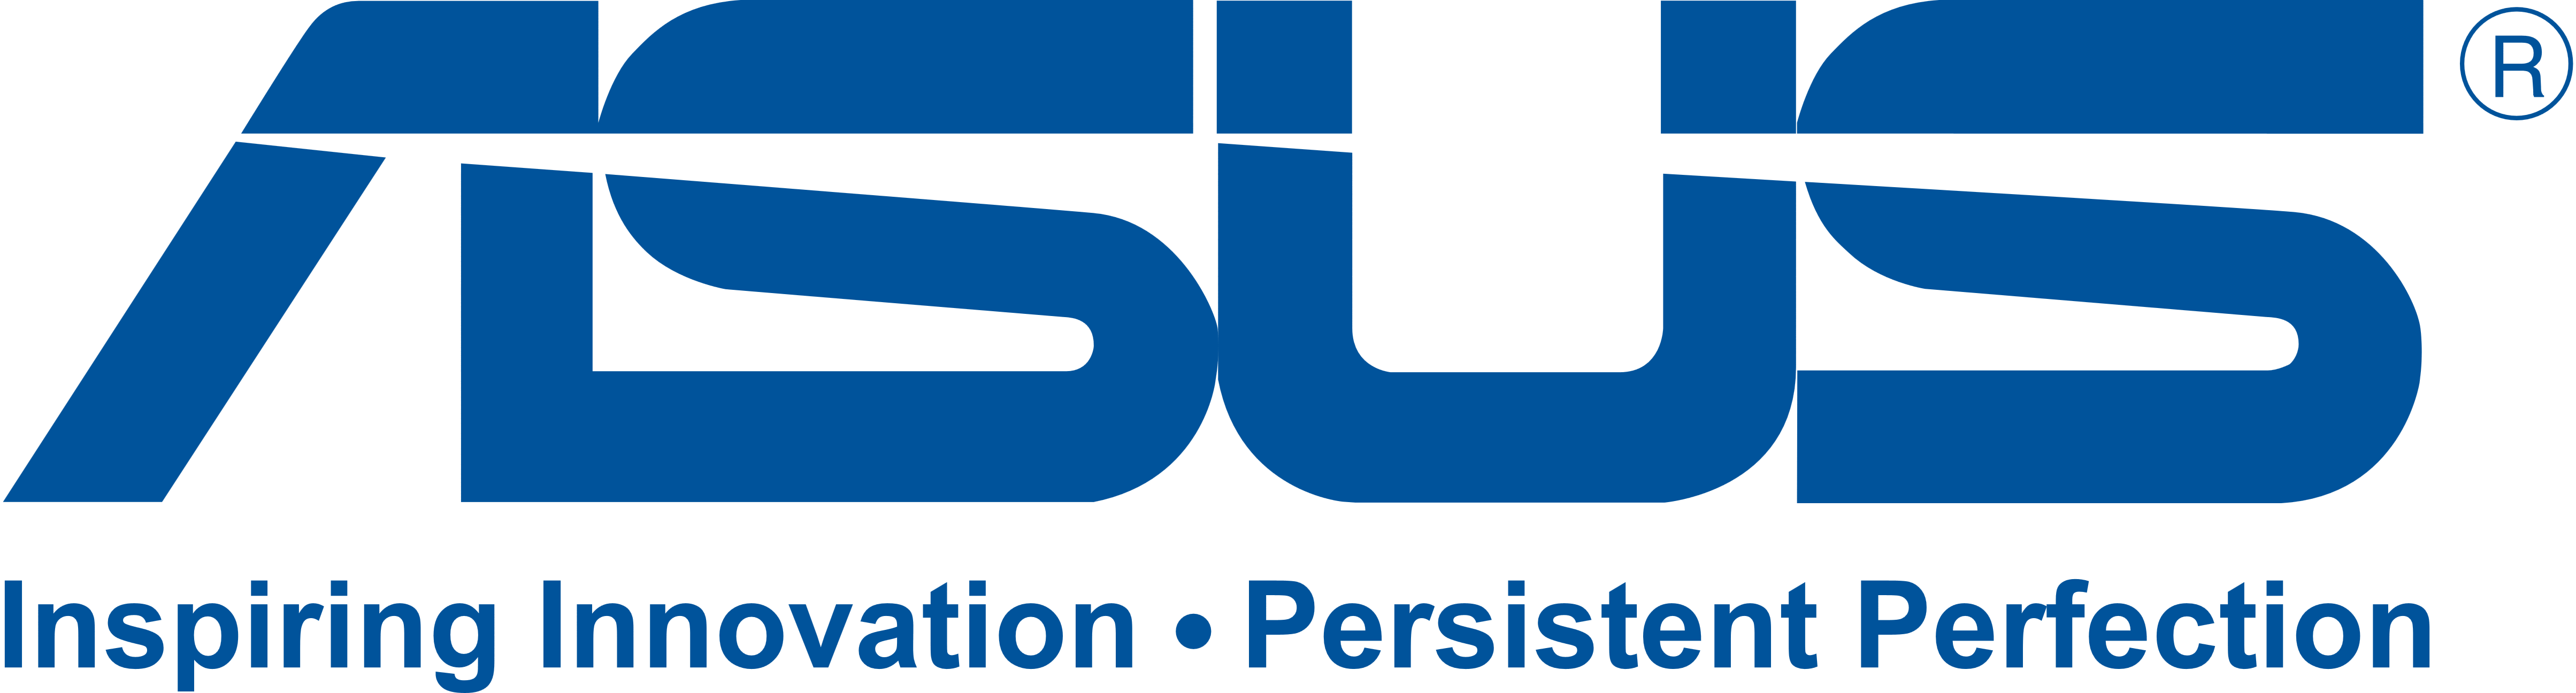 Persistent Logo - ASUS logo – inspiring innovation persistent perfection – Logos Download